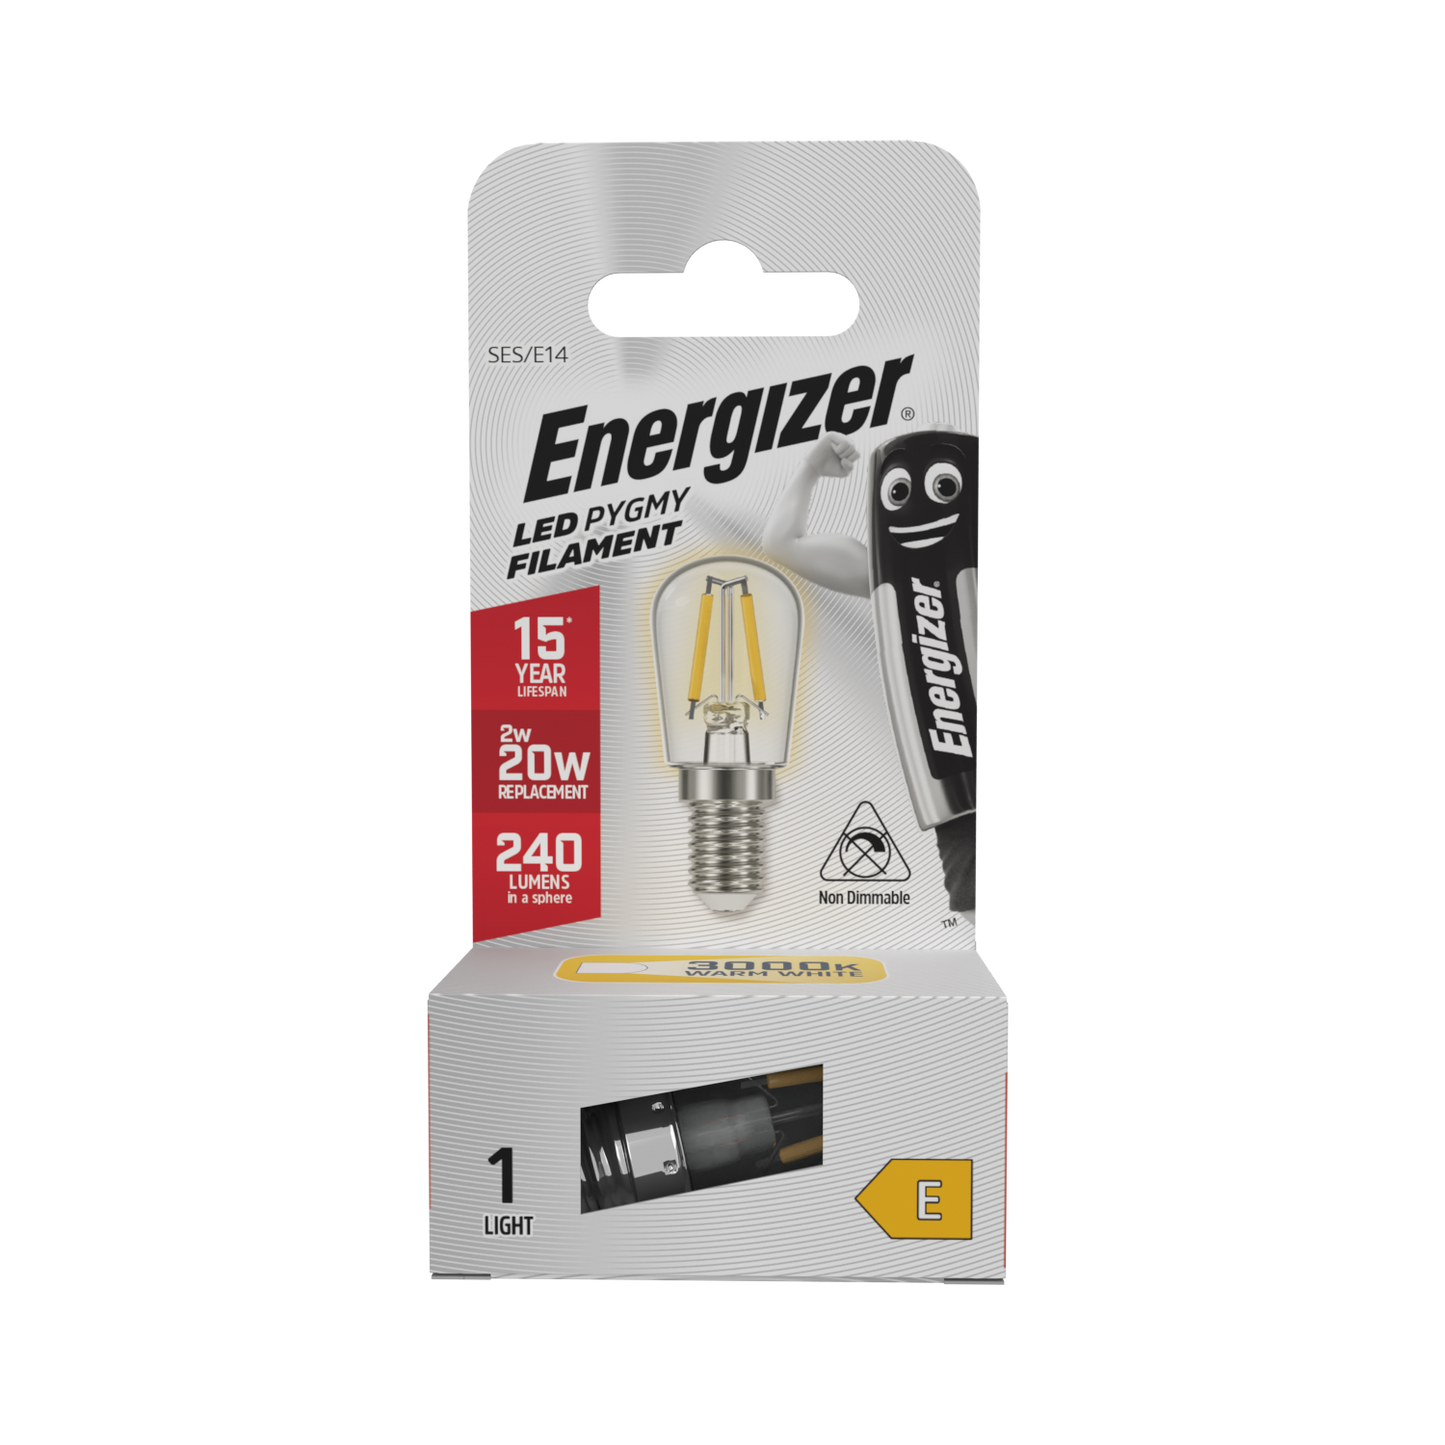 Energizer LED Filament Pygmy E14 (SES) 240lm 2W 3,000K (Warm White), Box of 1